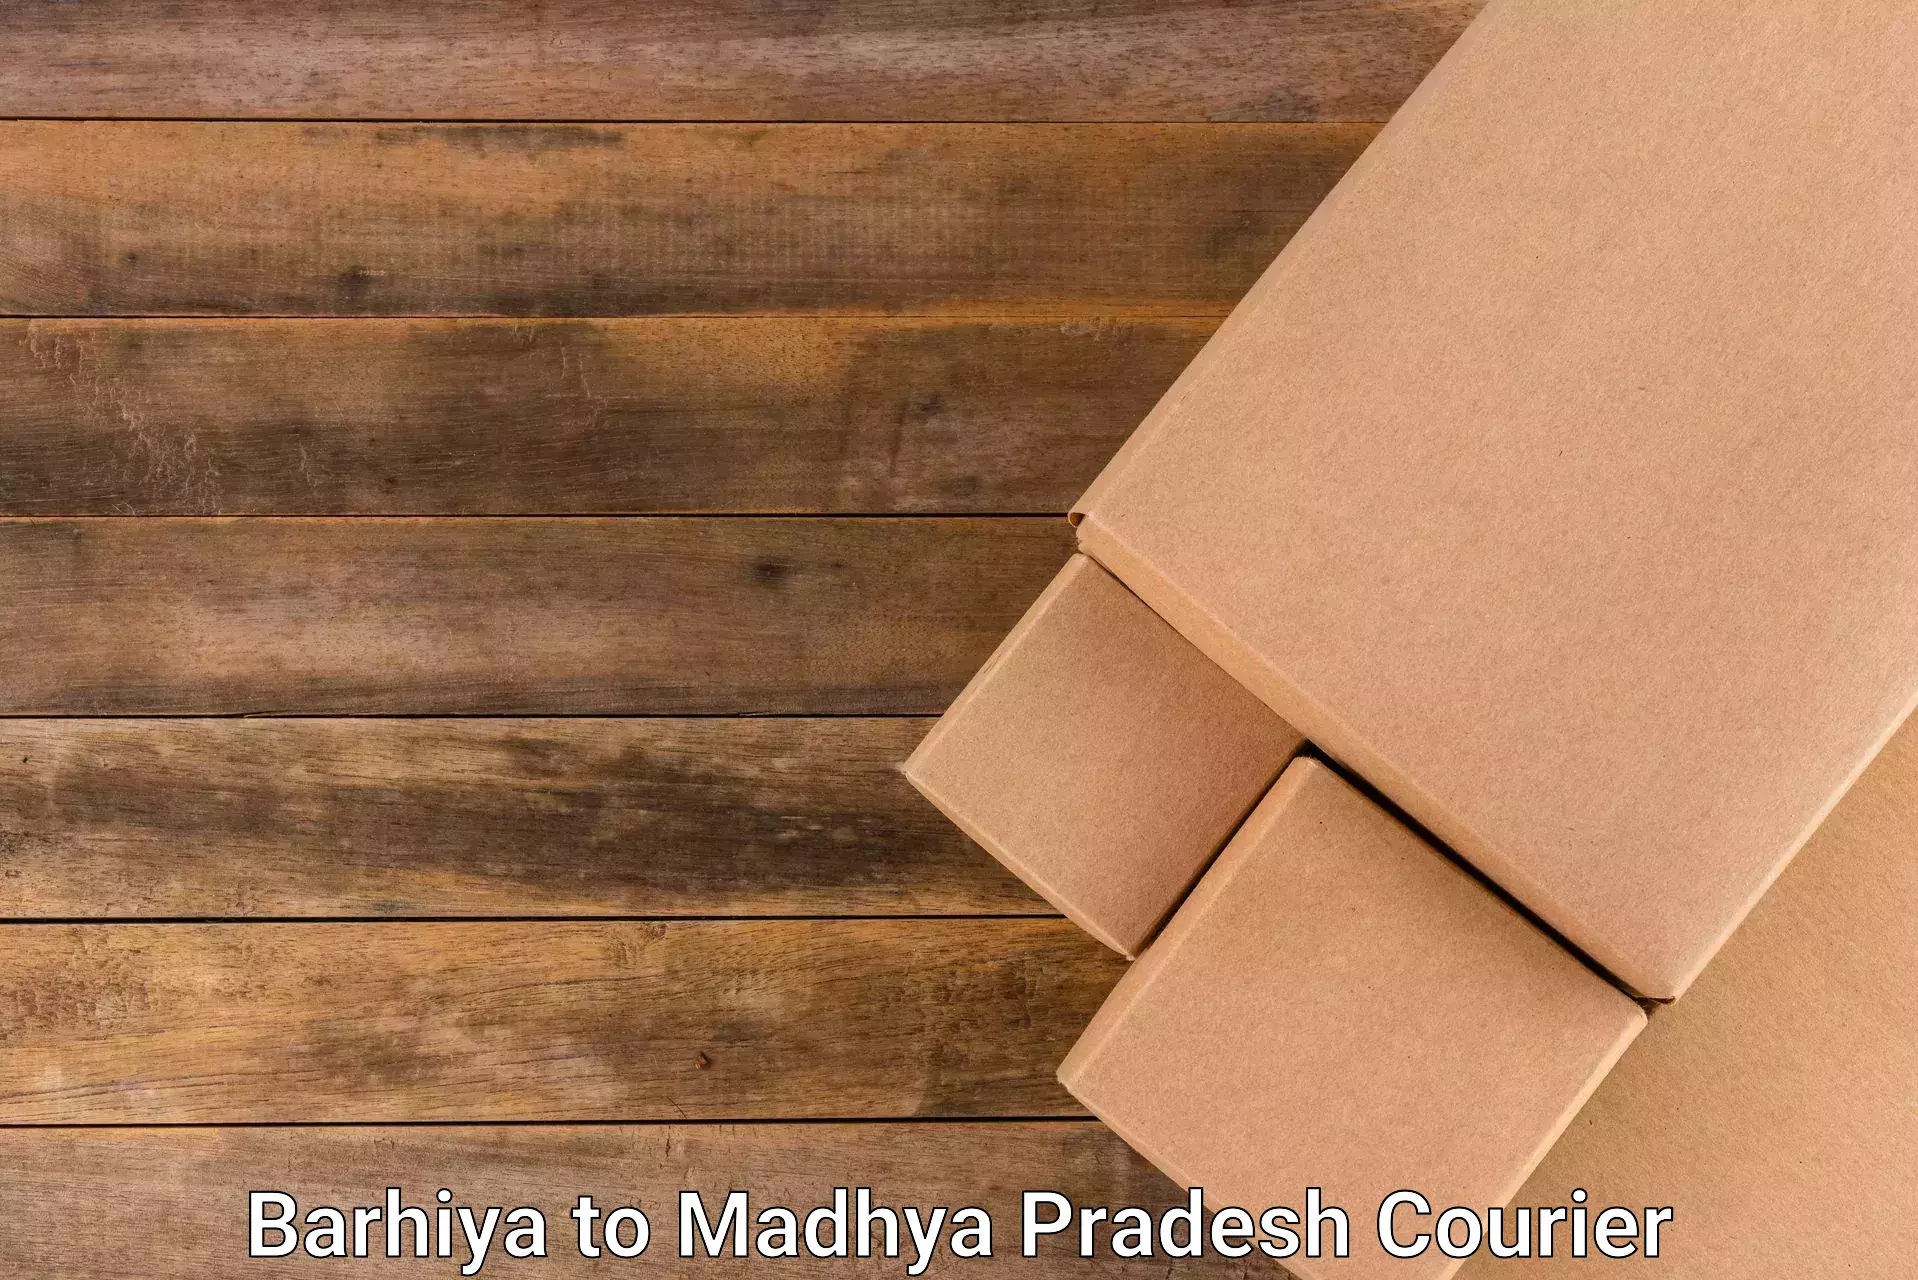 Courier service booking Barhiya to Begumganj